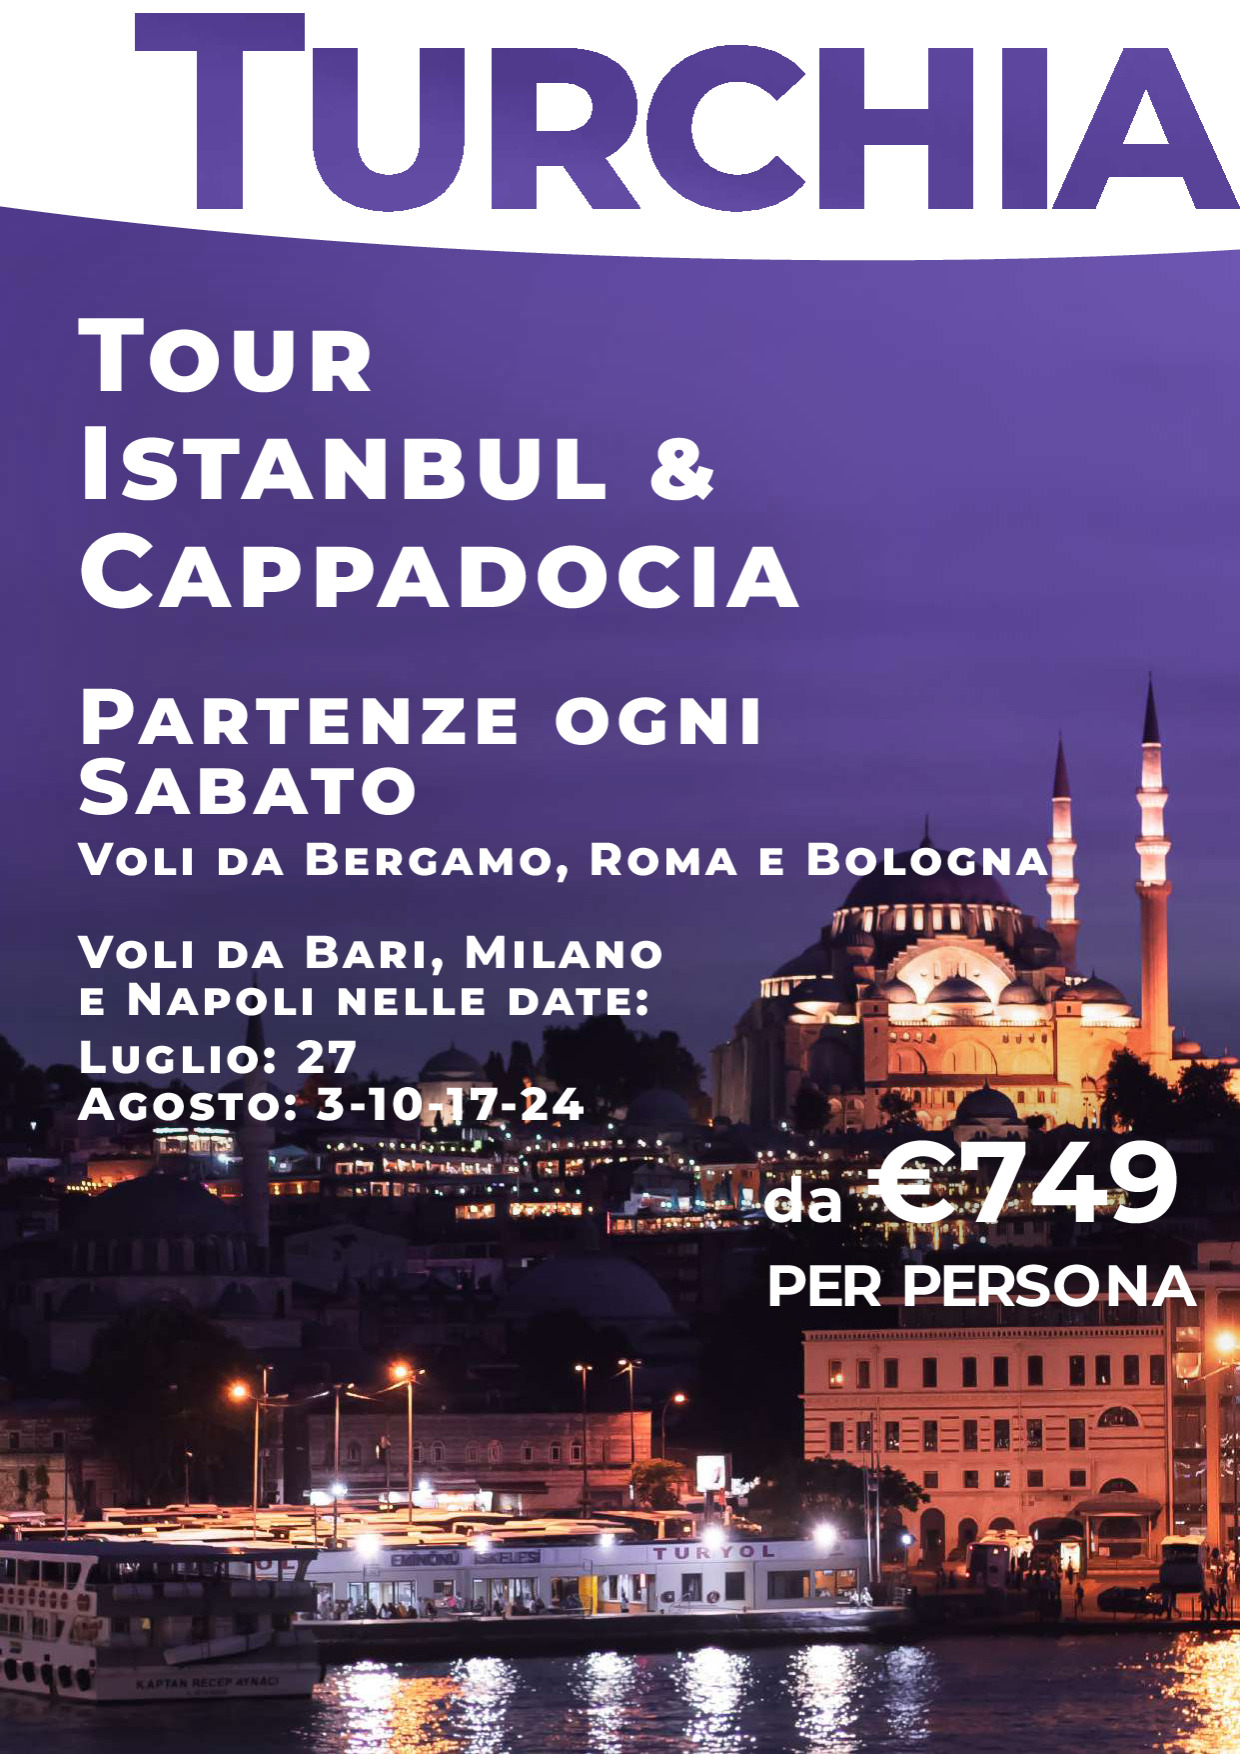 Tour Istanbul - Cappadocia Turchia